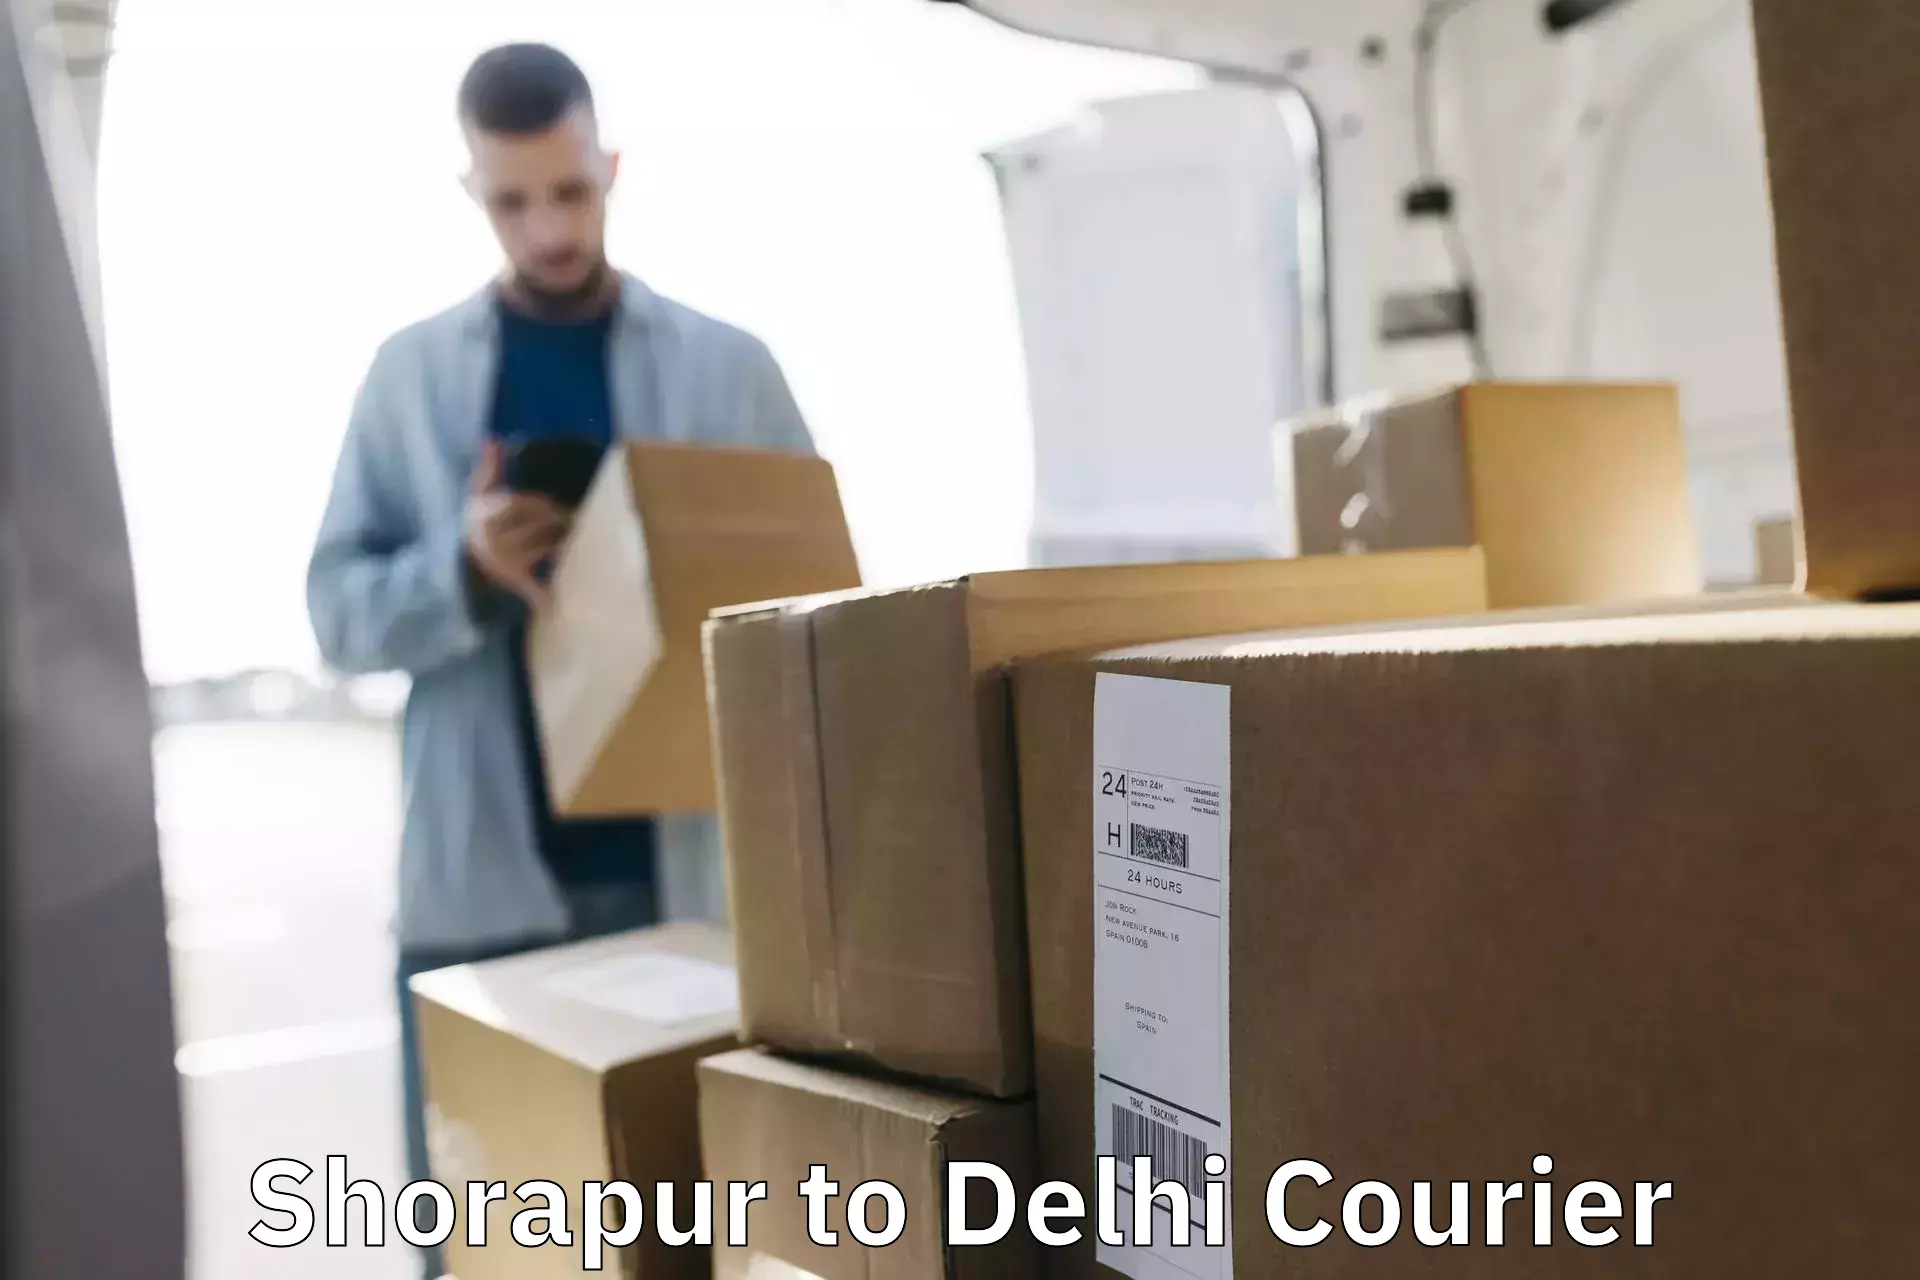 Efficient parcel service Shorapur to Ramesh Nagar